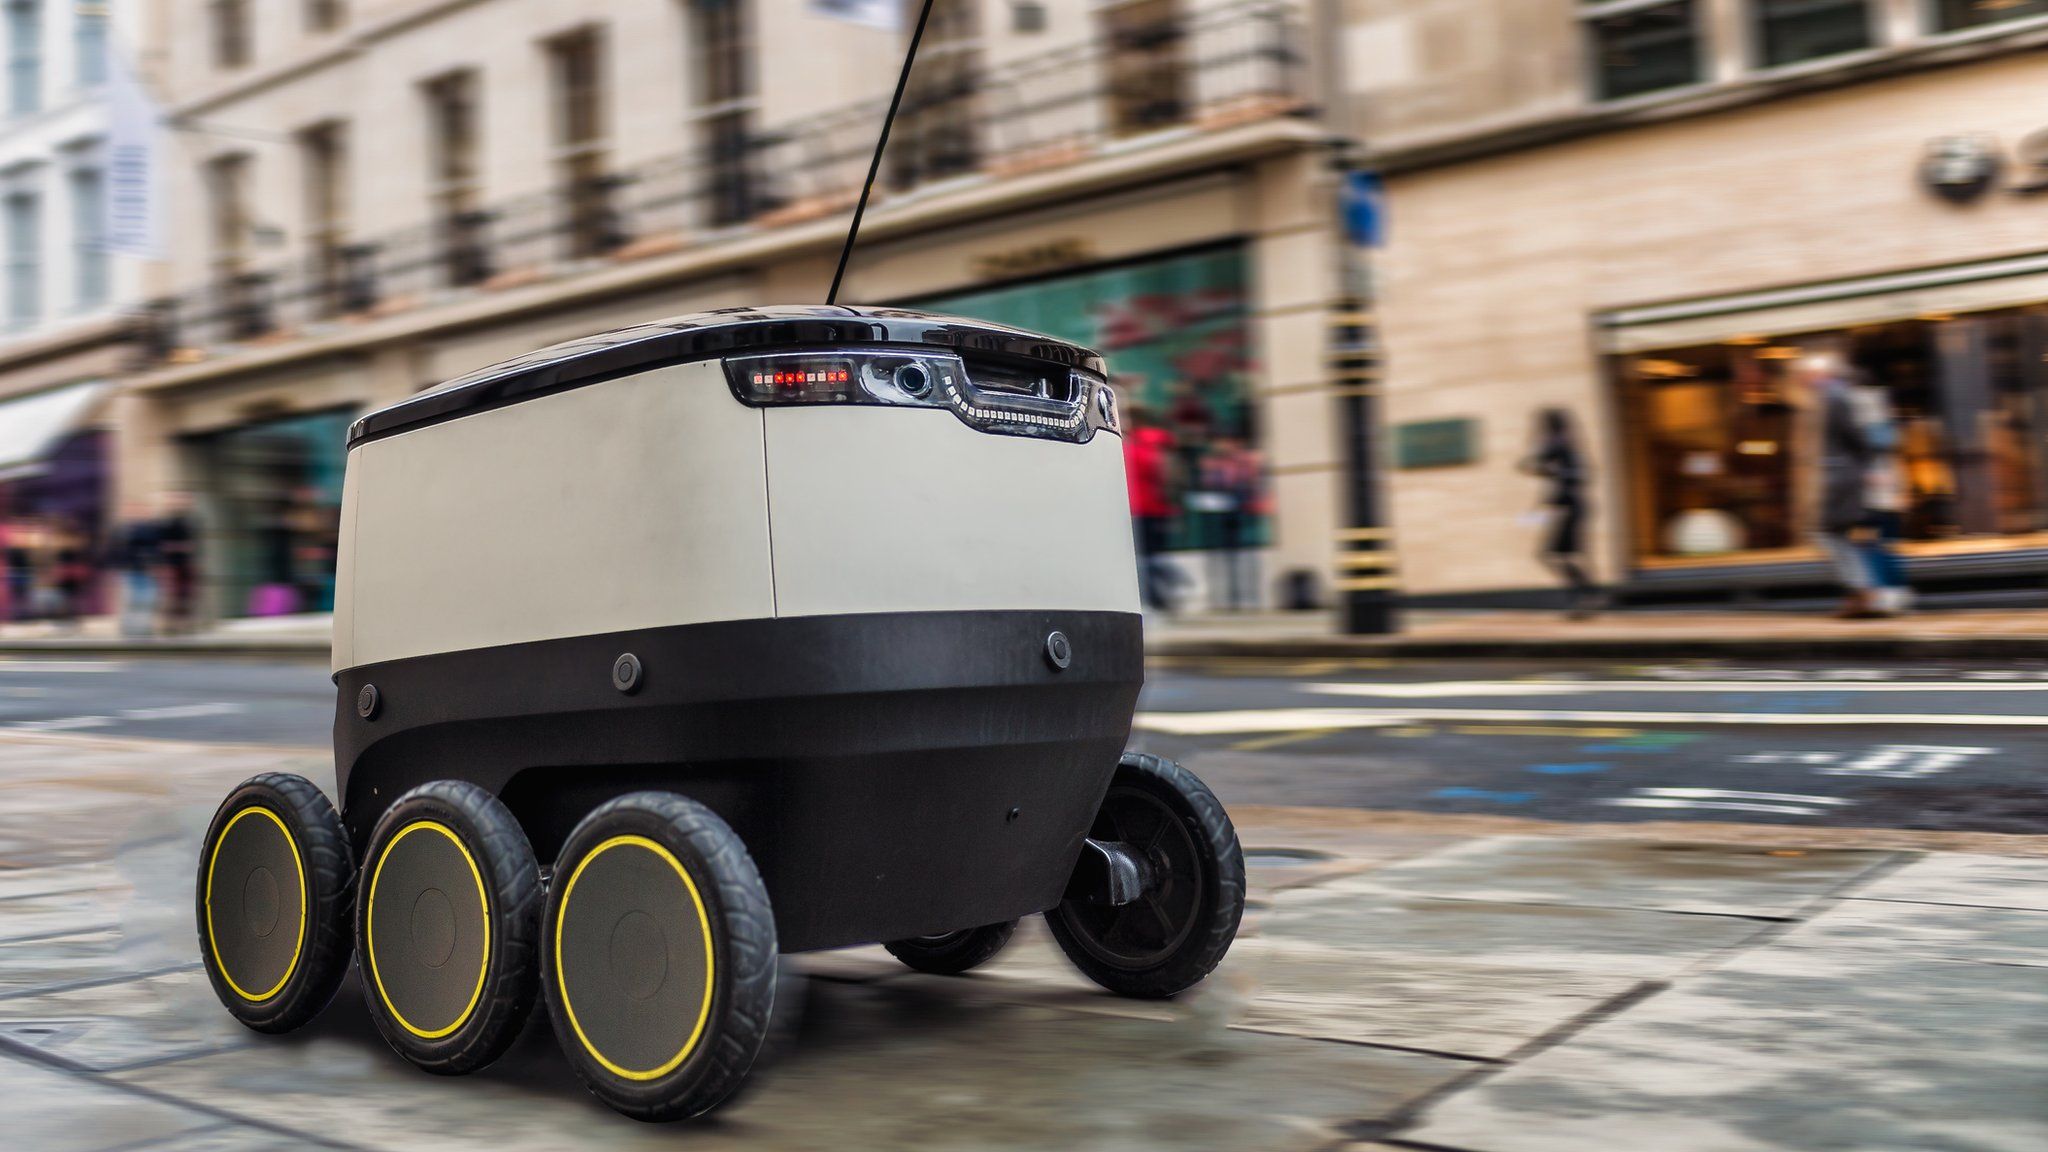 Self-driving robot navigating London street